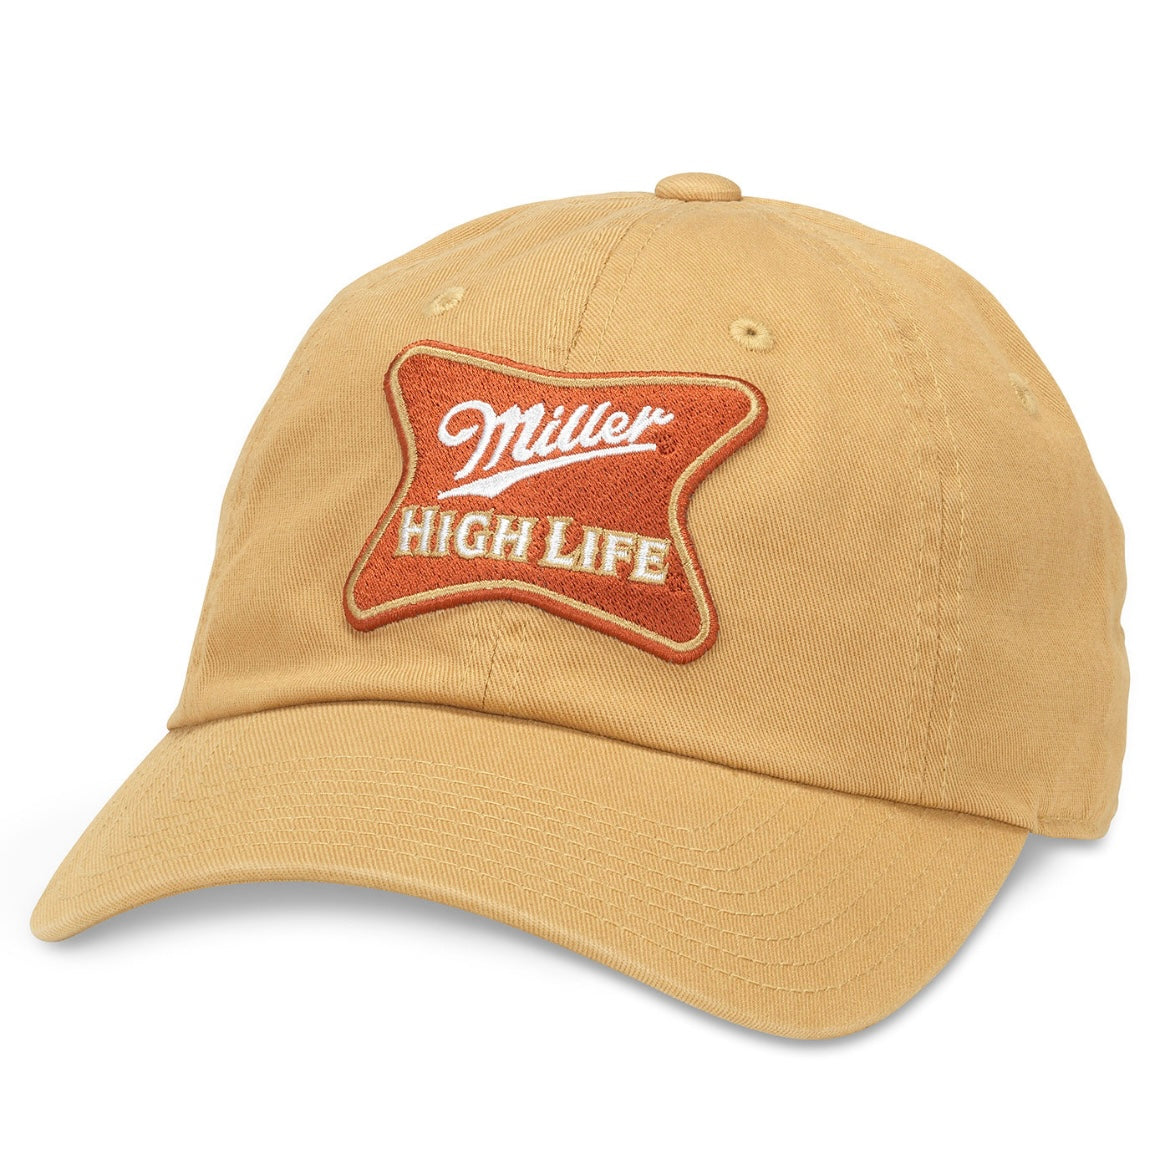 Miller High Life Gold Baseball Cap